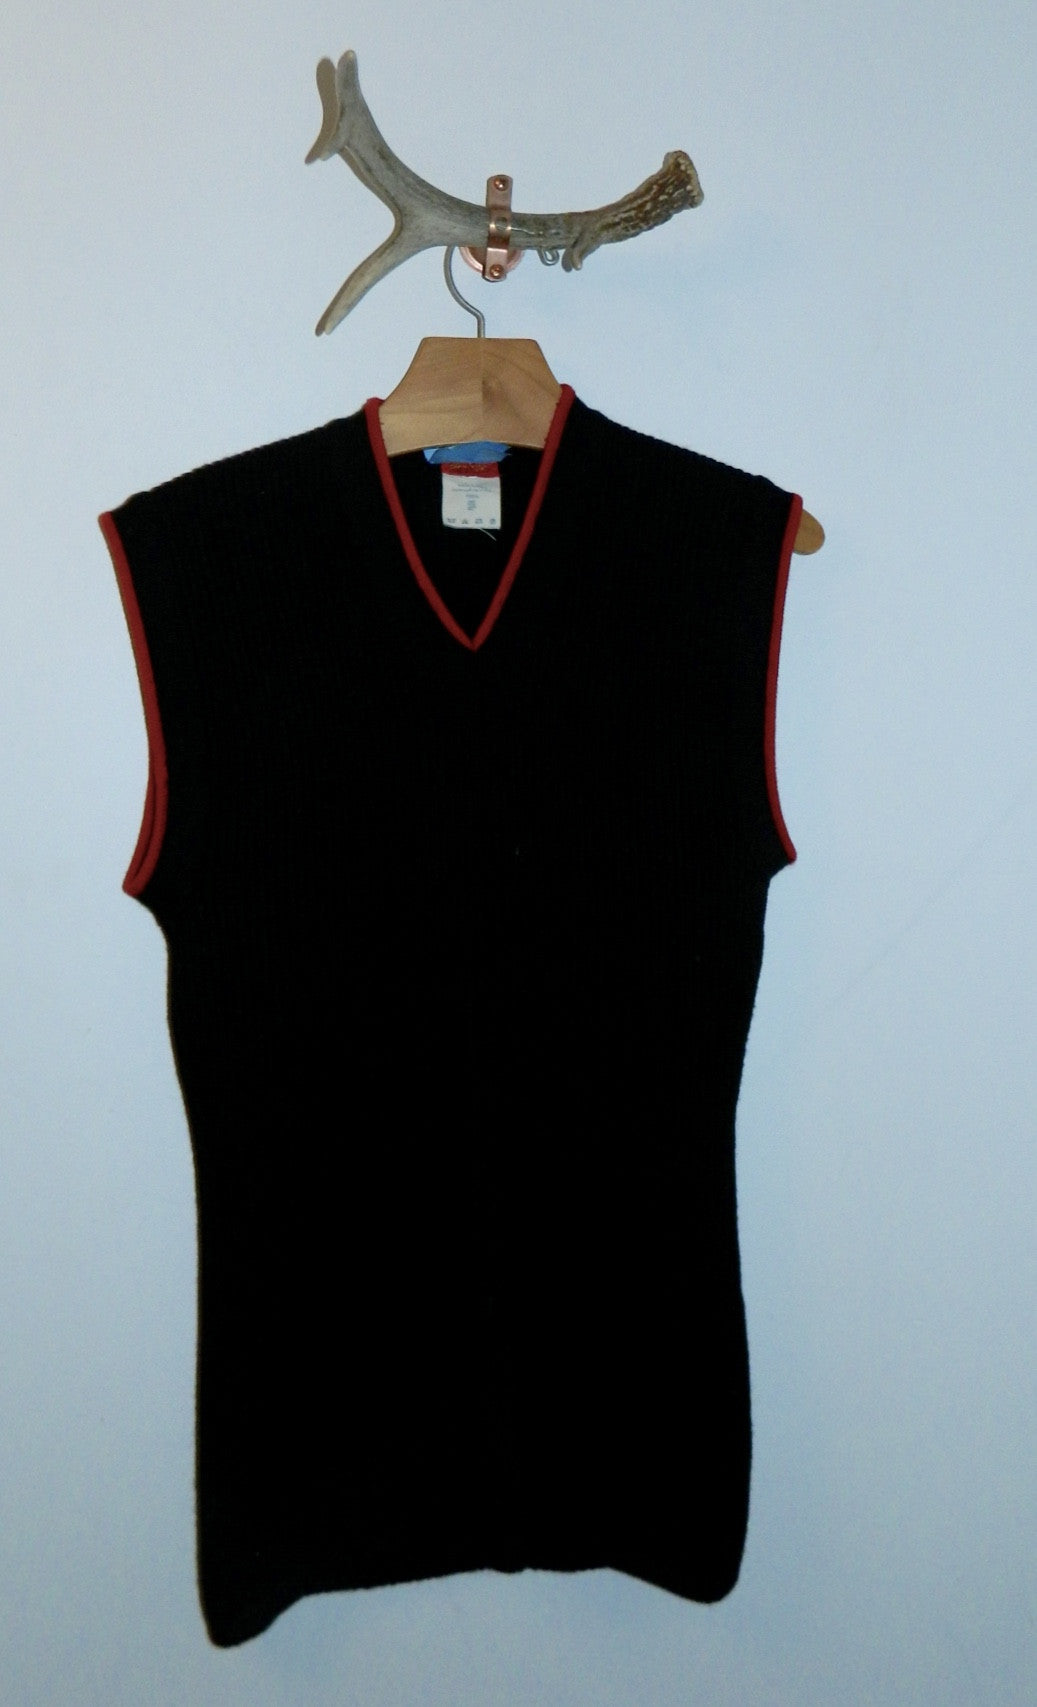 vintage KENZO sweater black wool ribbed knit top red trim 1980s designer